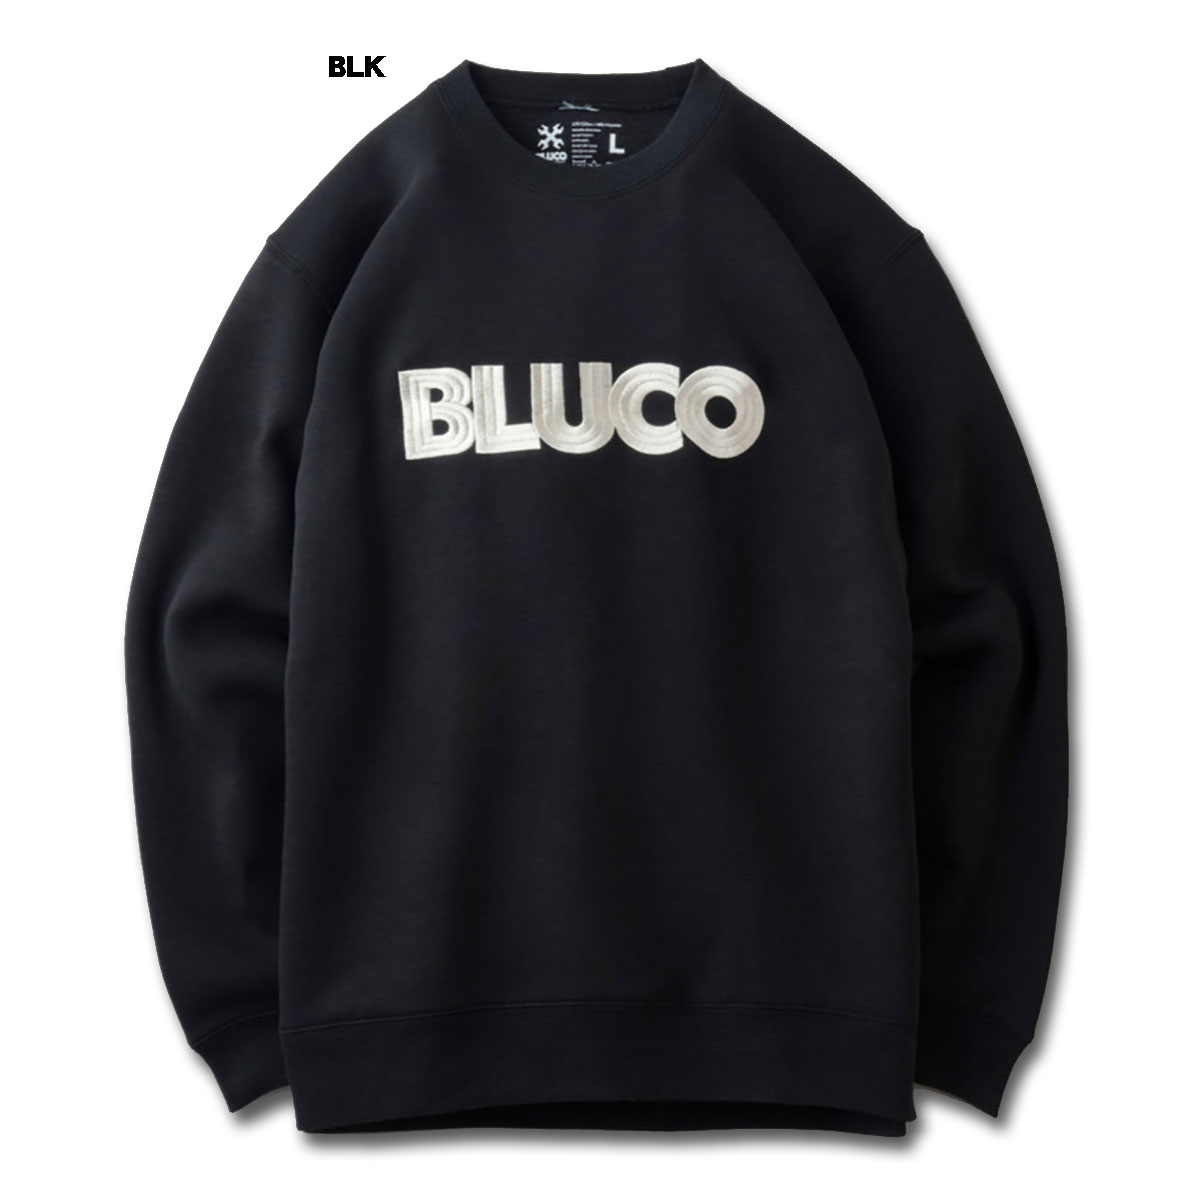 BLUCO(ブルコ) OL-1209 SWEATSHIRTS -Embroidery- 4色(BLK...